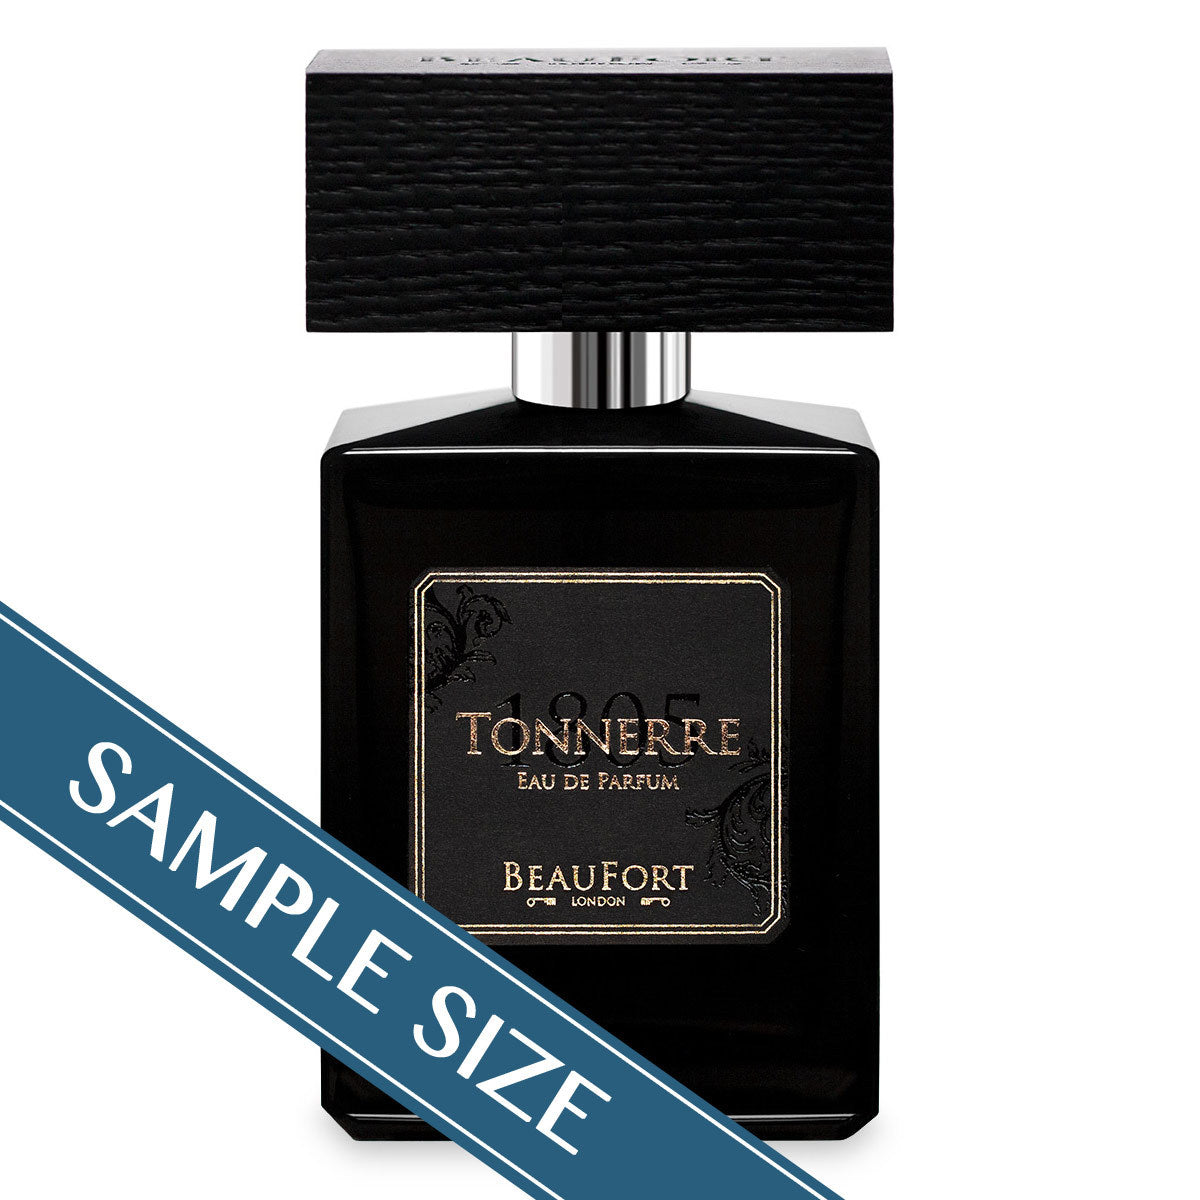 Primary image of Sample - 1805 Tonnerre Eau de Parfum